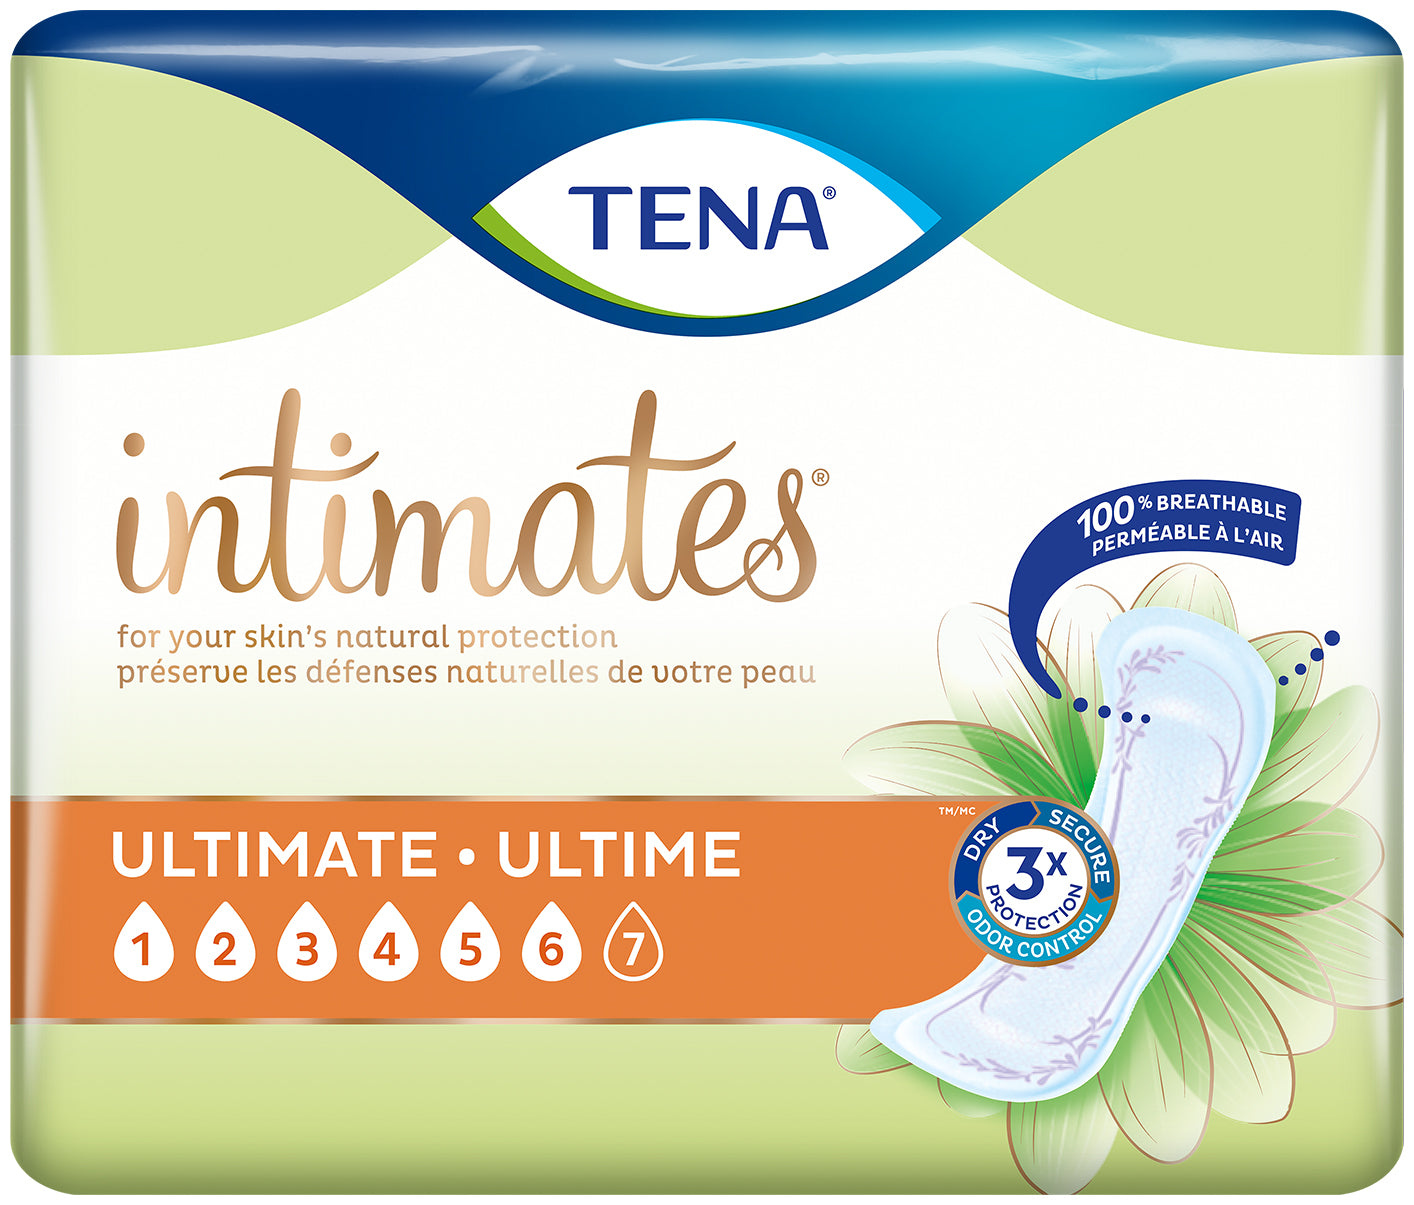 TENA Sensitive Care Ultimate Pads